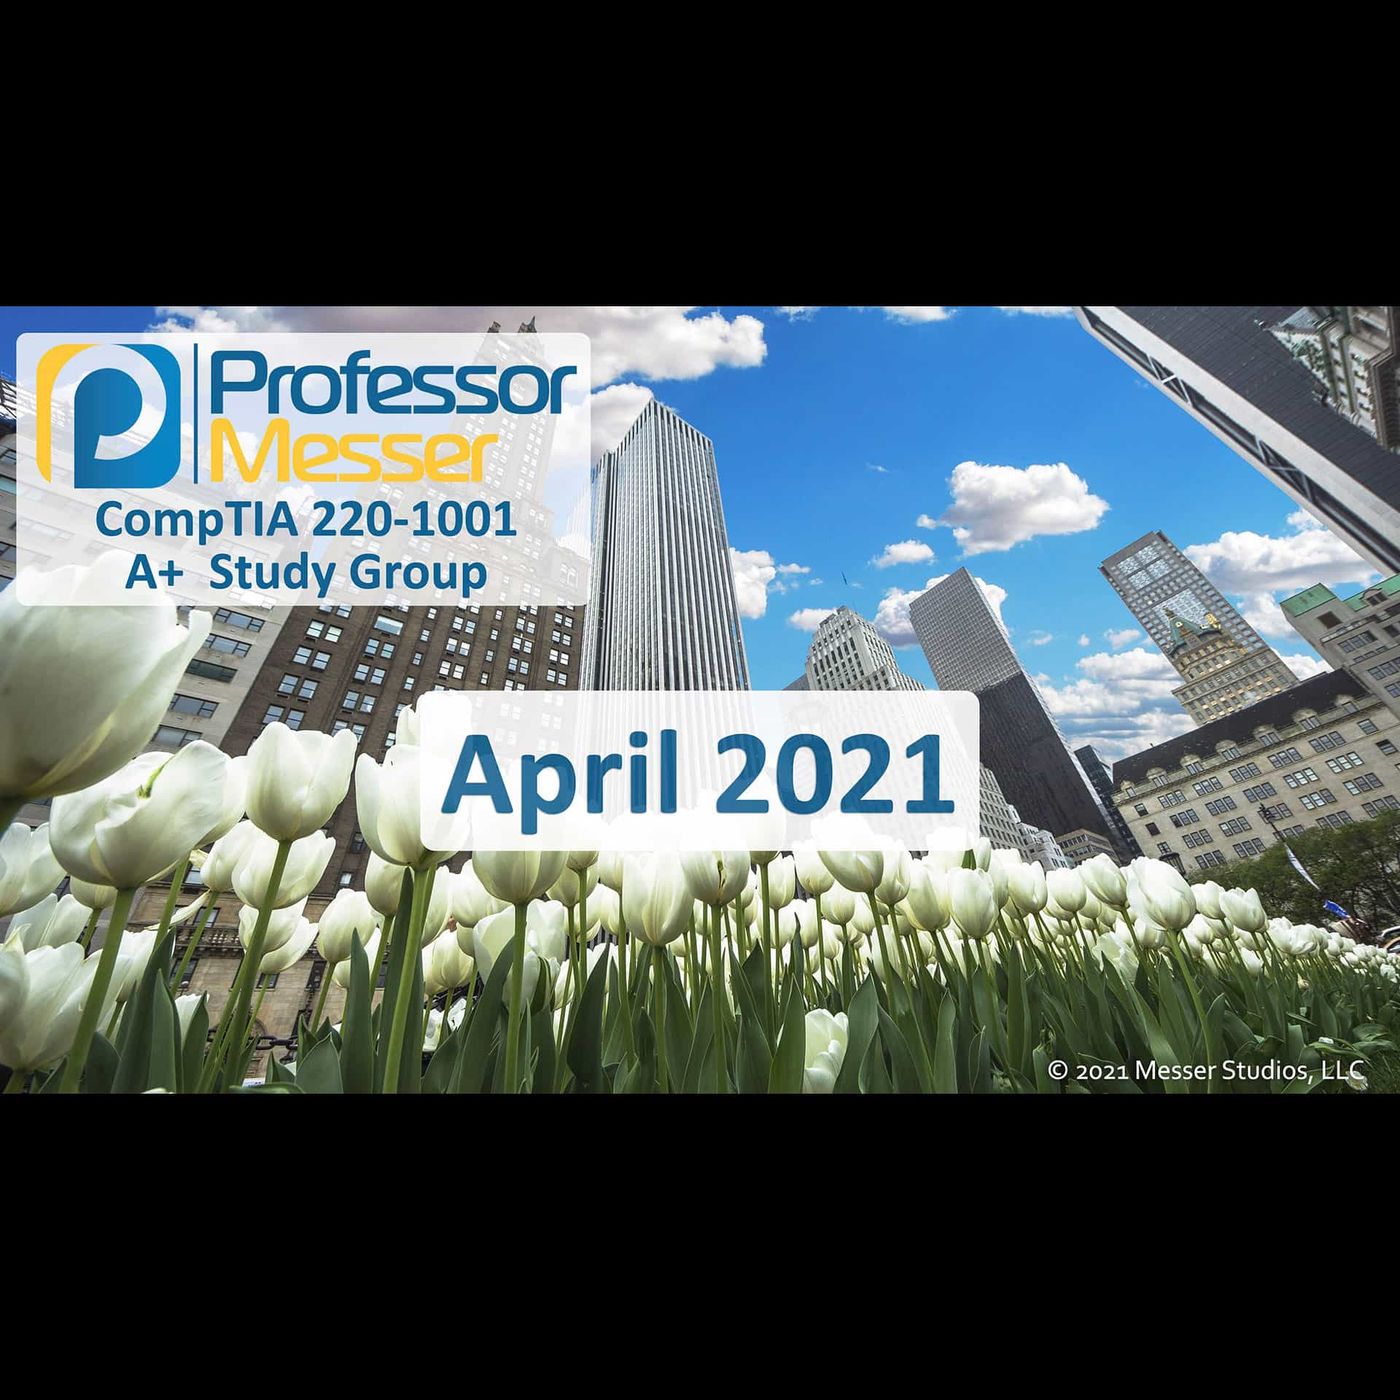 Professor Messer's CompTIA 220-1001 A+ Study Group - April 2021